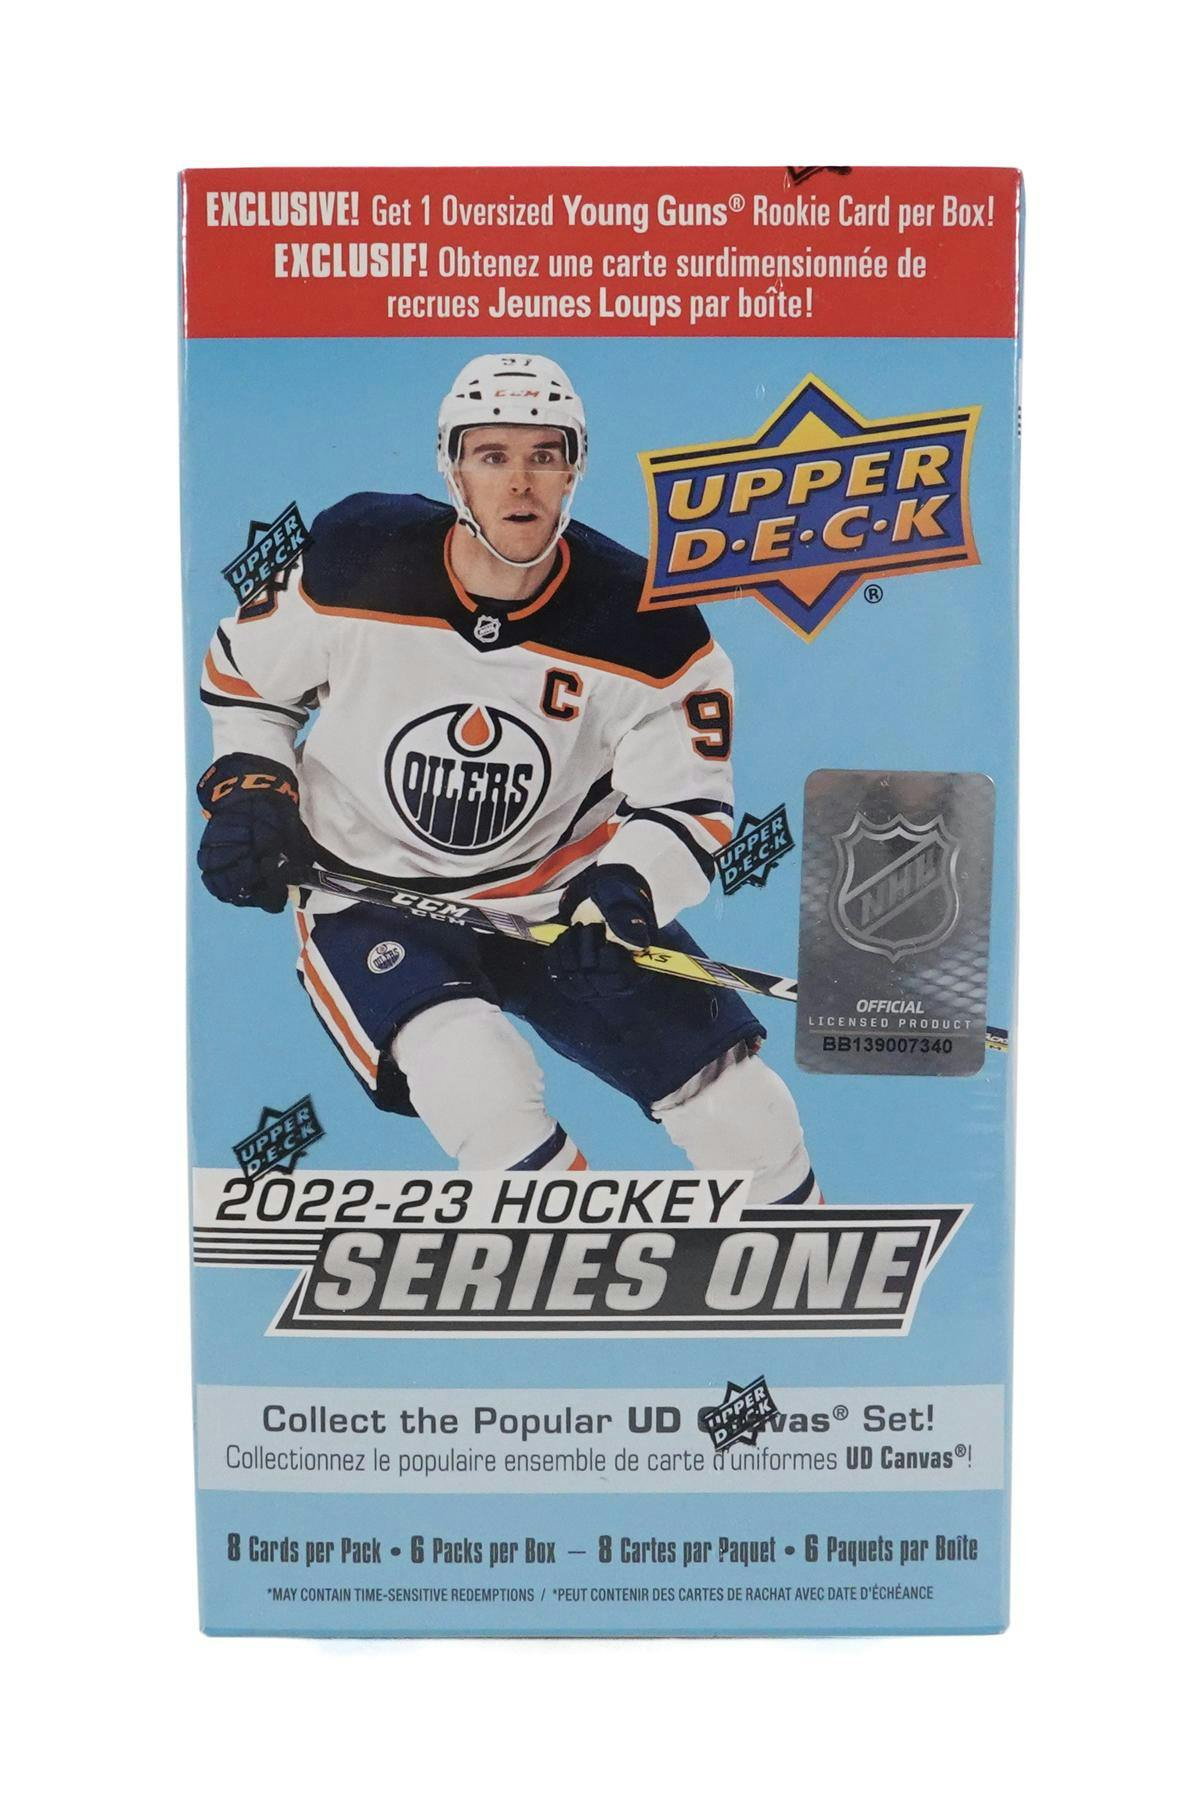 Sidney Crosby Hockey Cards: Buying Guide, Rookie Card Checklist